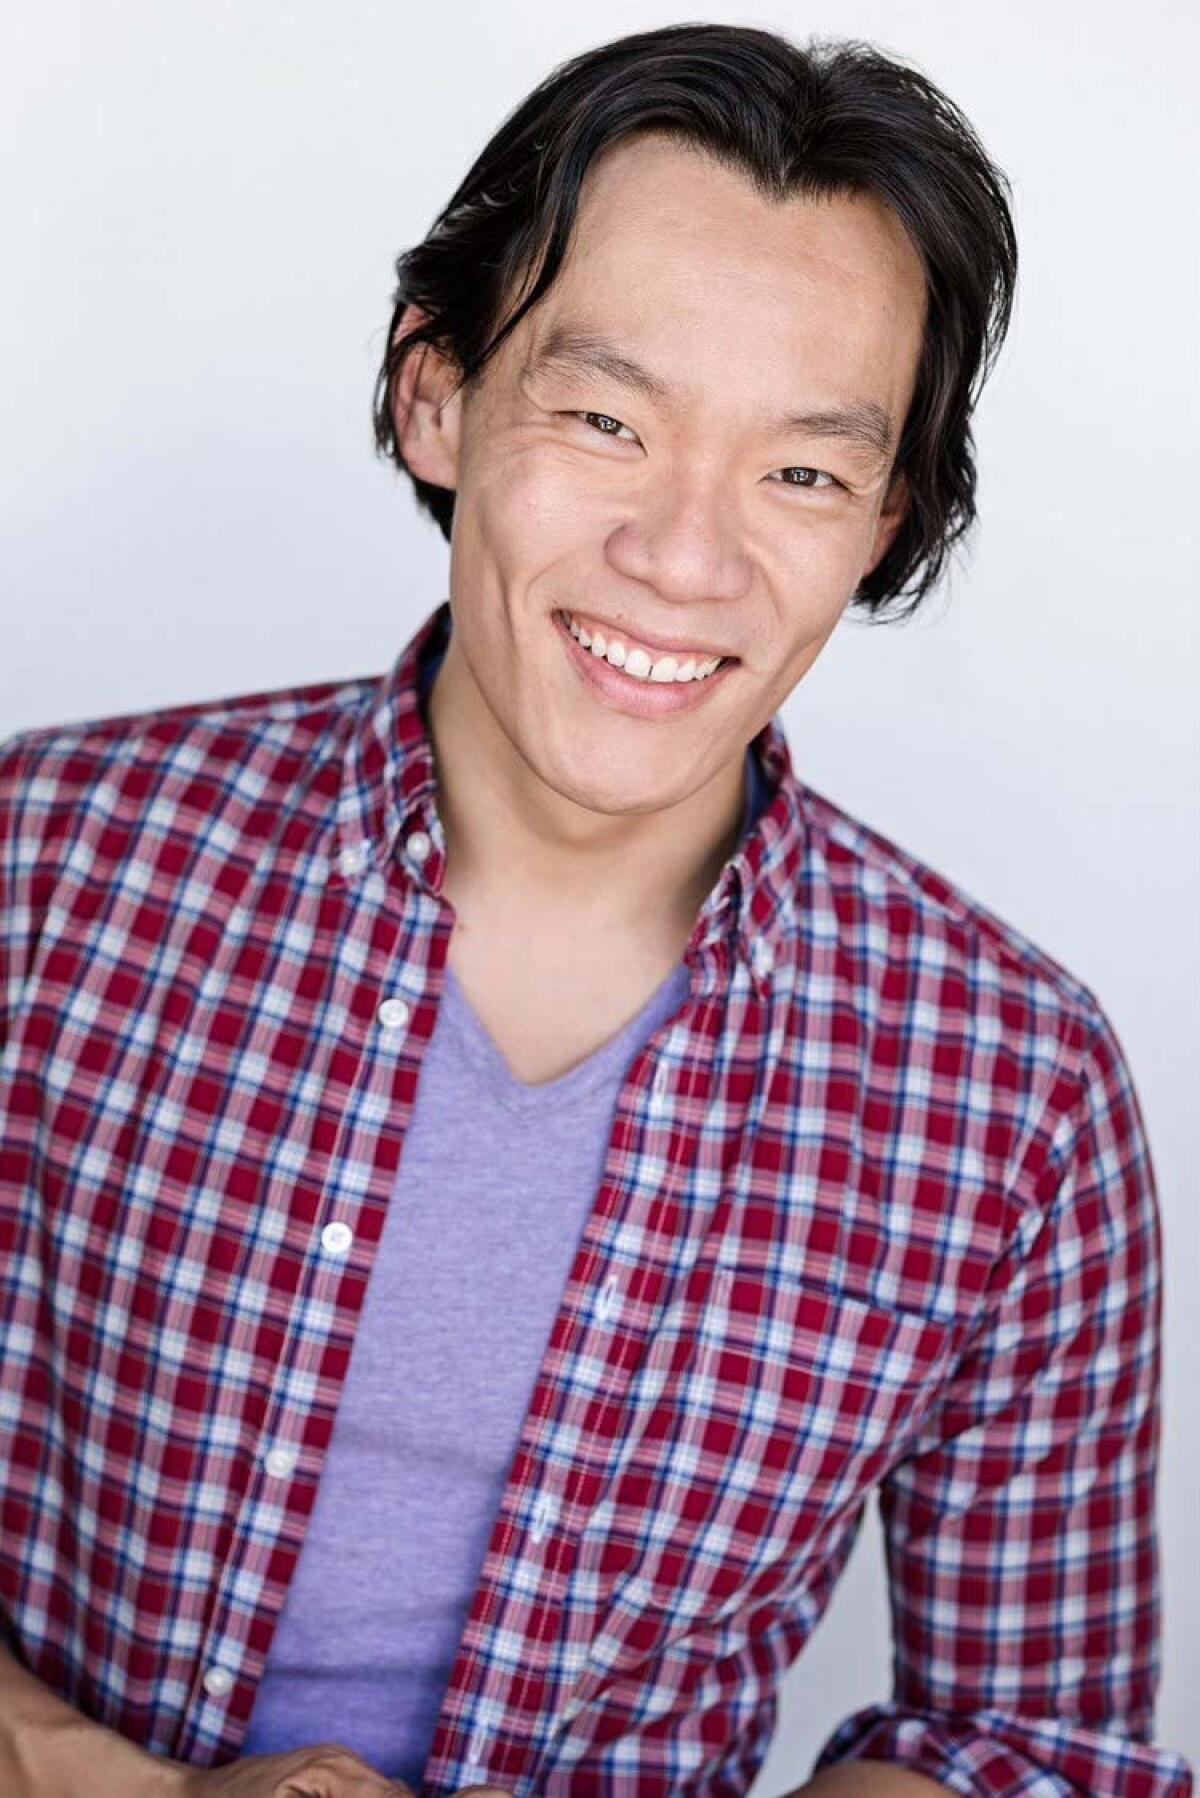 A headshot of a smiling man wearing a plaid shirt.